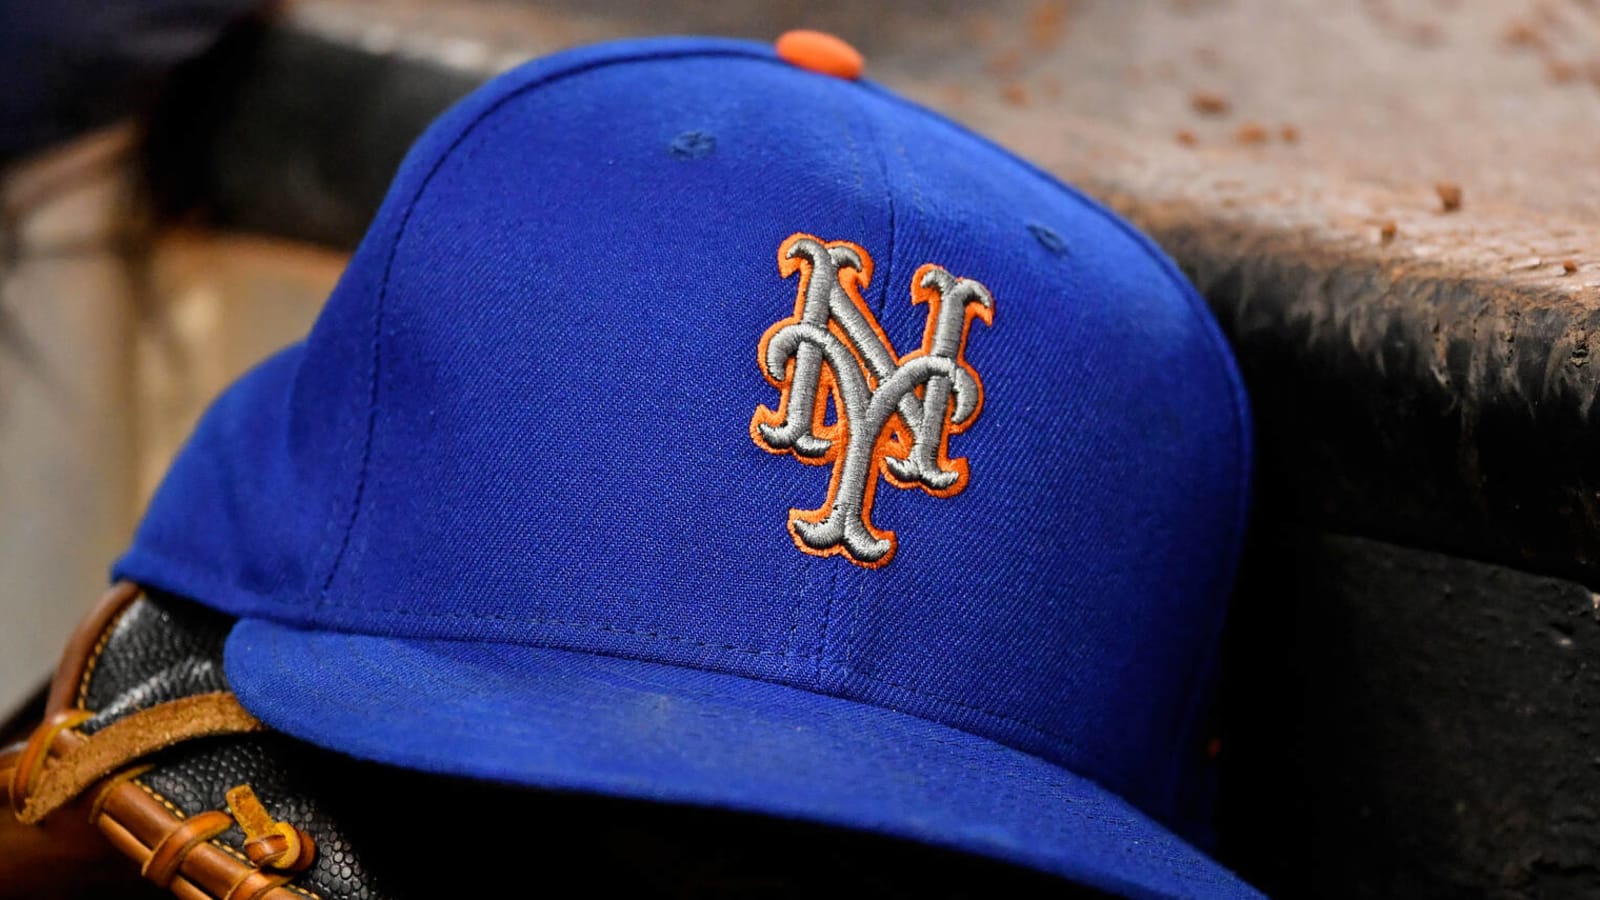 Mets could promote top prospect Francisco Alvarez in 2022?